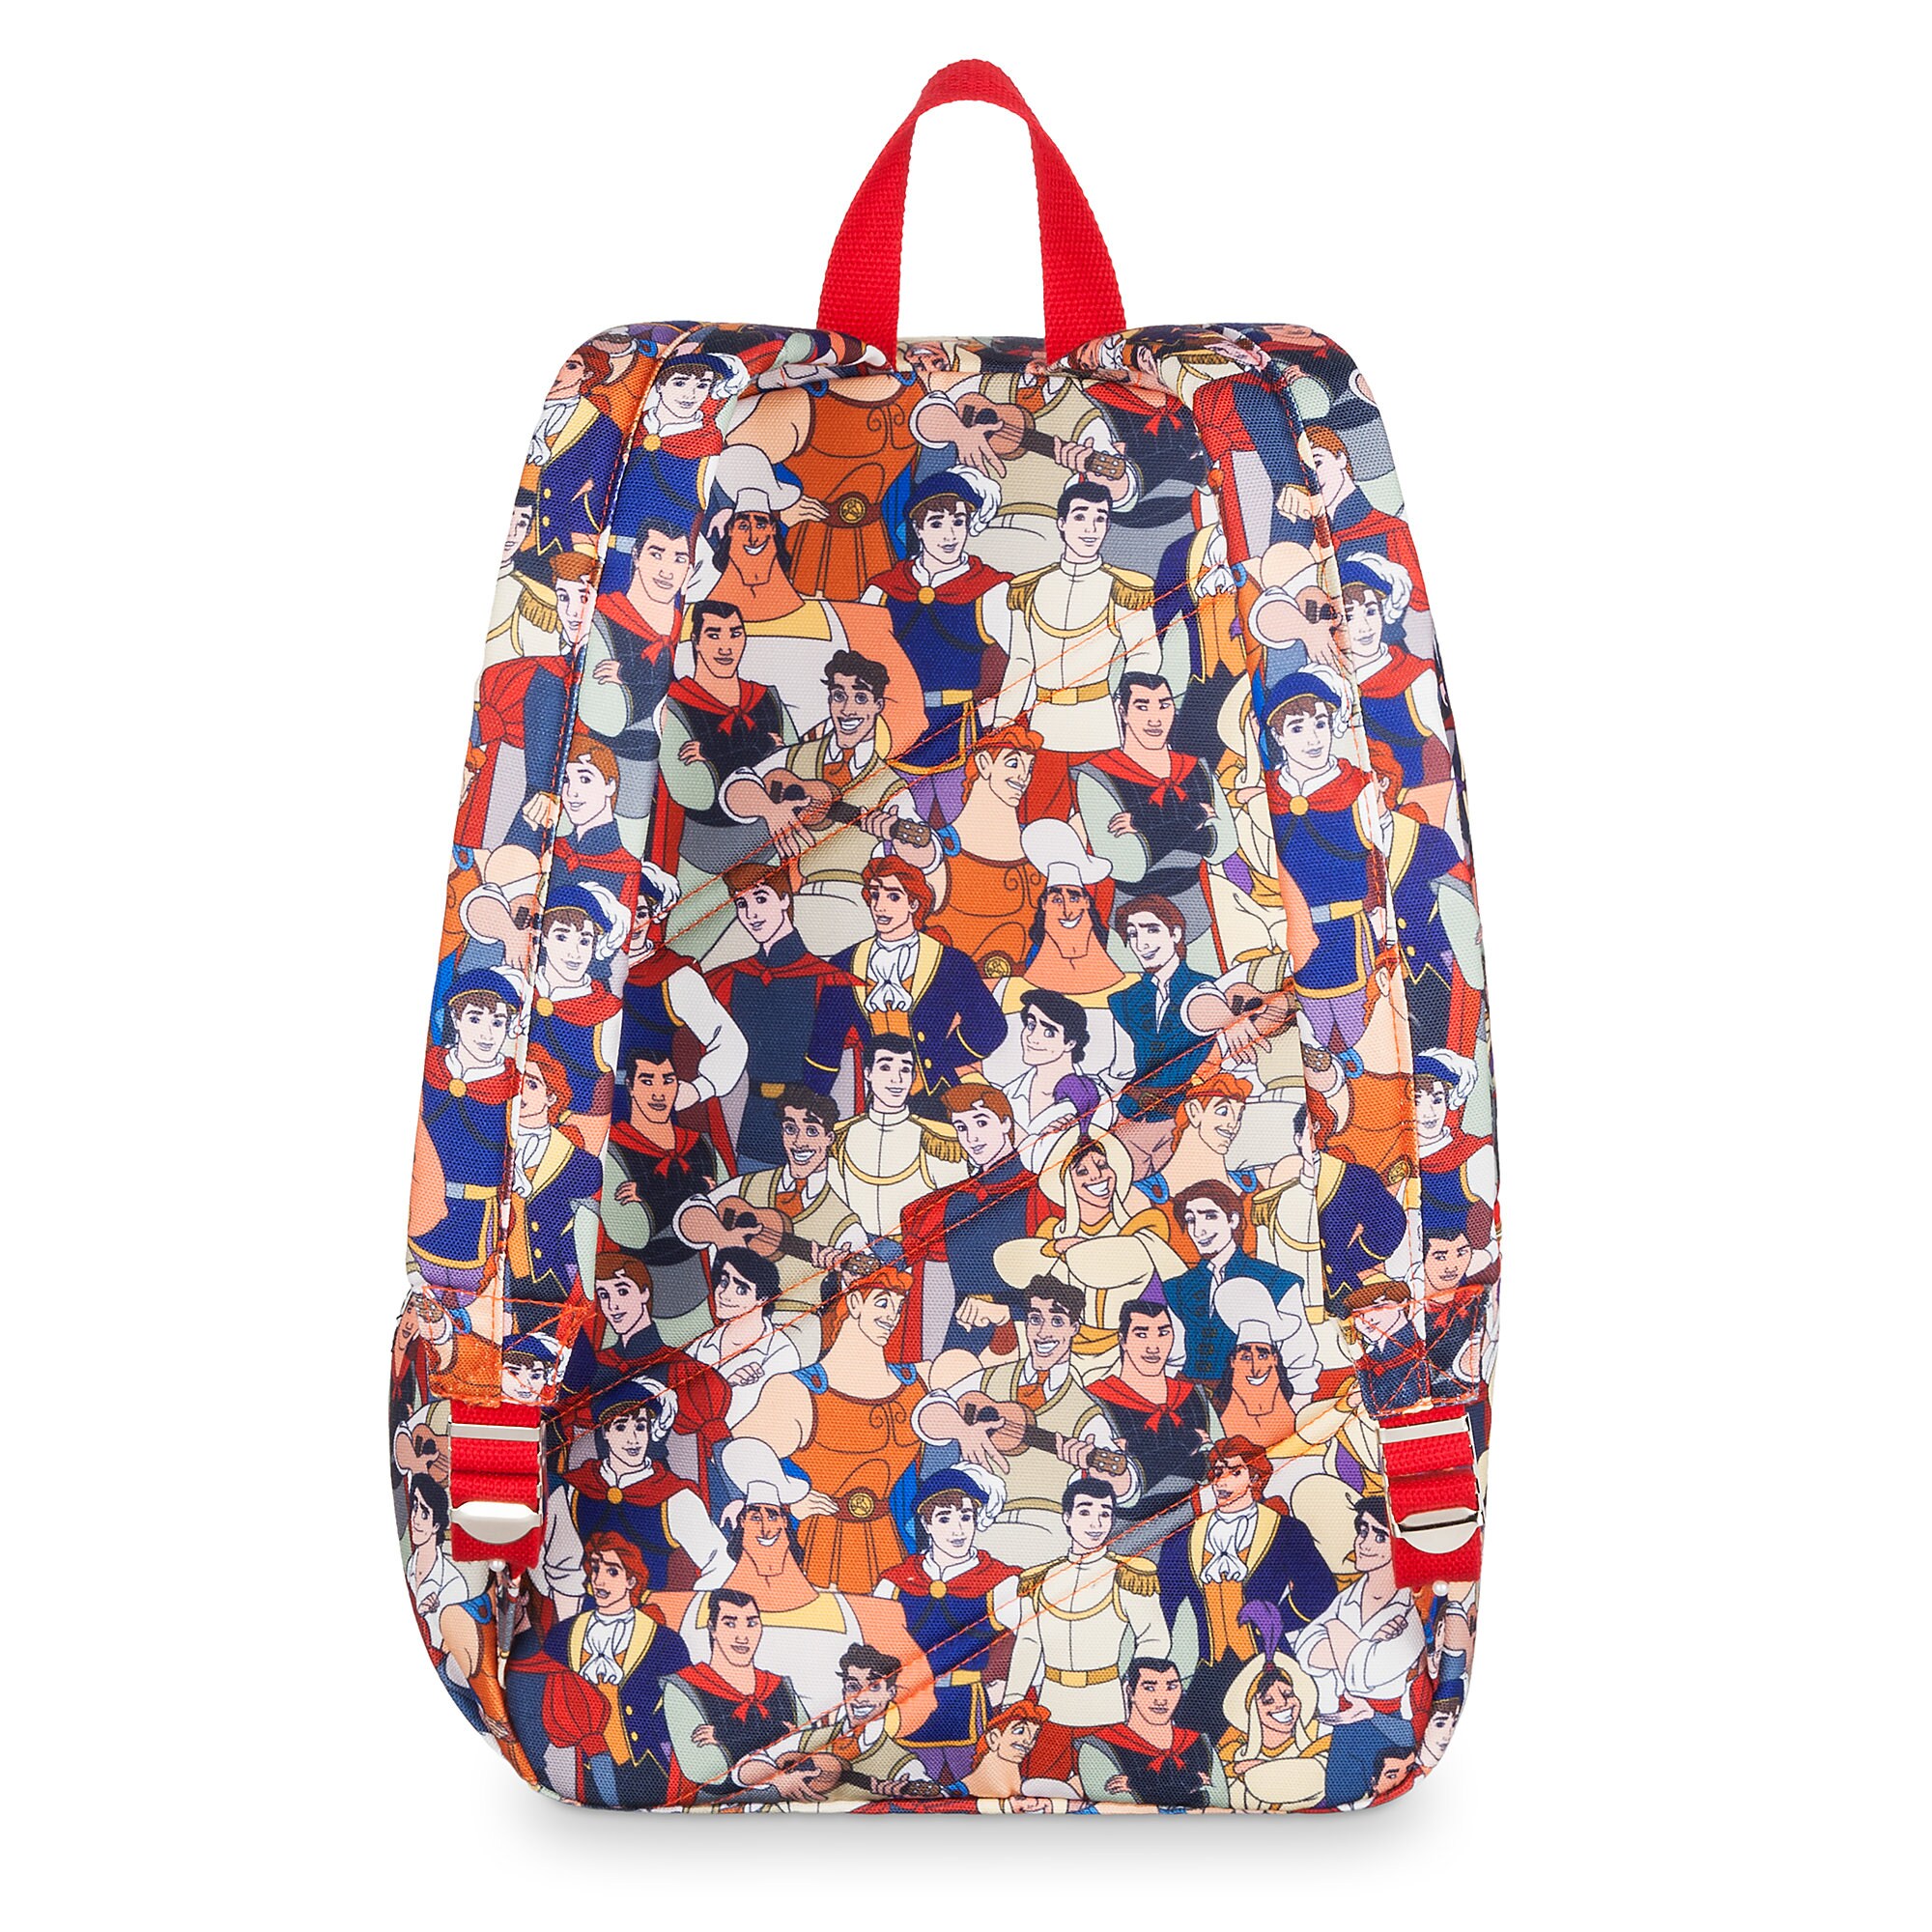 Disney Prince Backpack - Oh My Disney